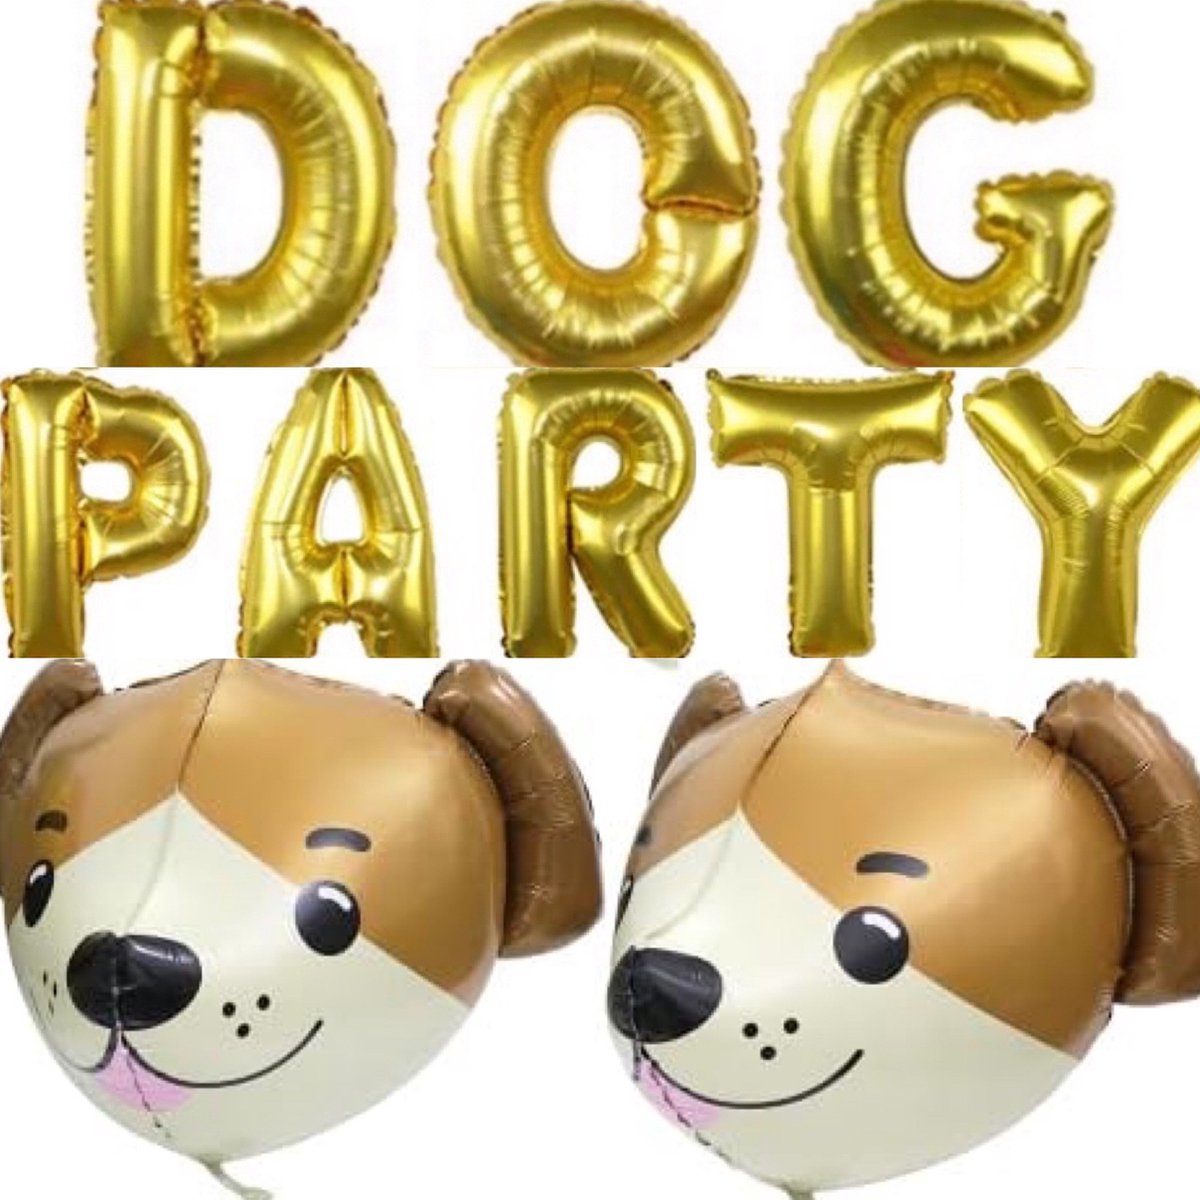 Folie ballon letter set Dog Party goud en 2 Cute Animal Face folie ballonnen - hond - ballon - honden verjaardag - dog party - 4thePerfectParty